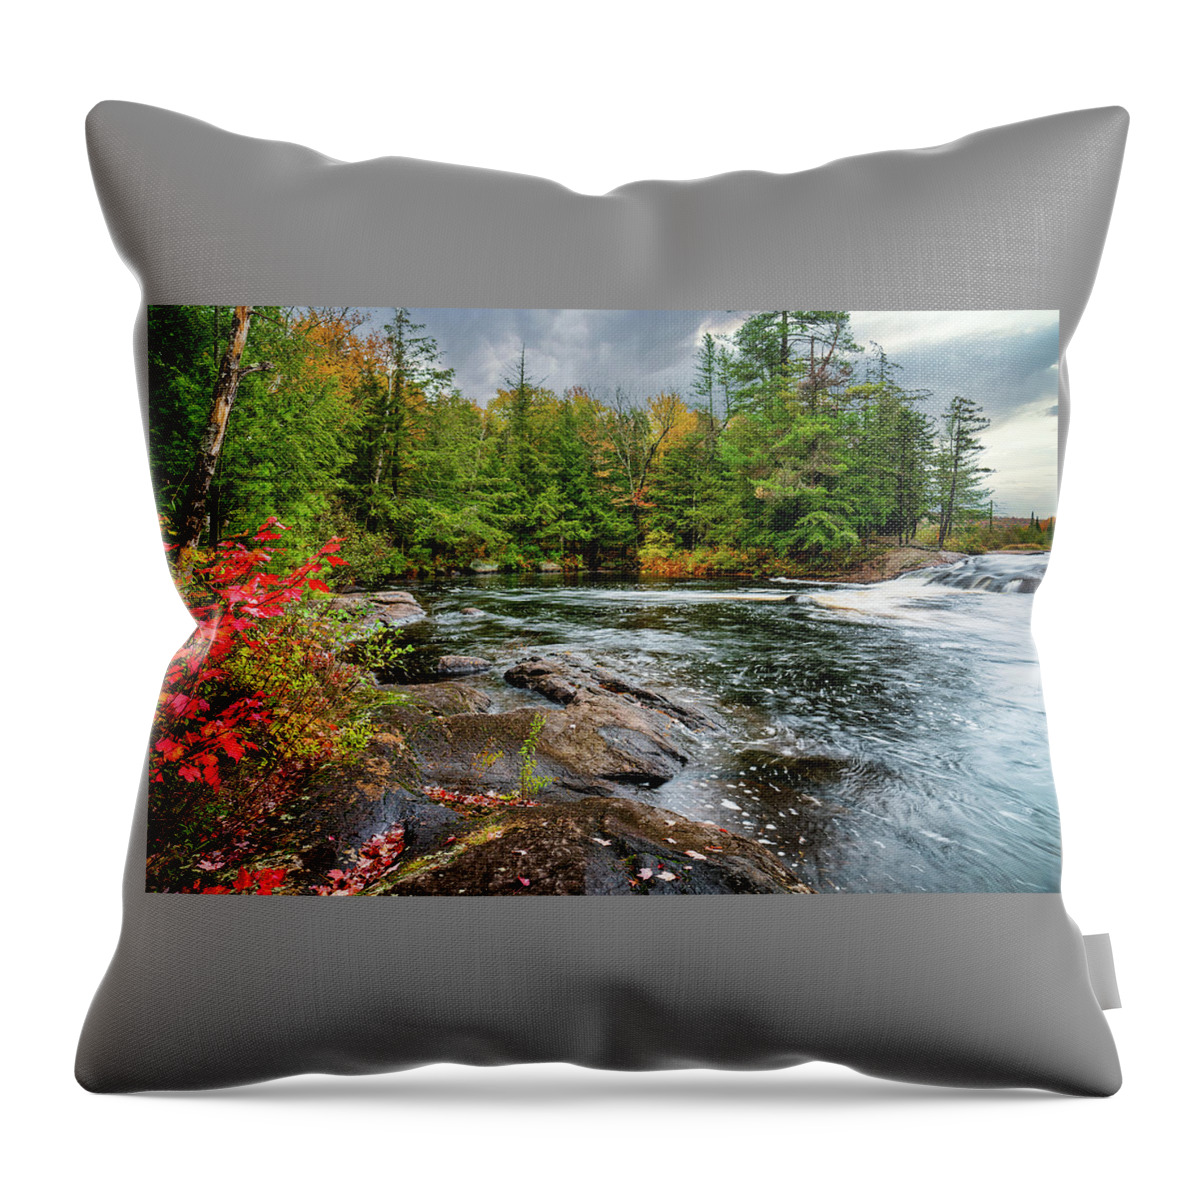 Fall Throw Pillow featuring the photograph Adirondacks Autumn at Bog River Falls 2 by Ron Long Ltd Photography